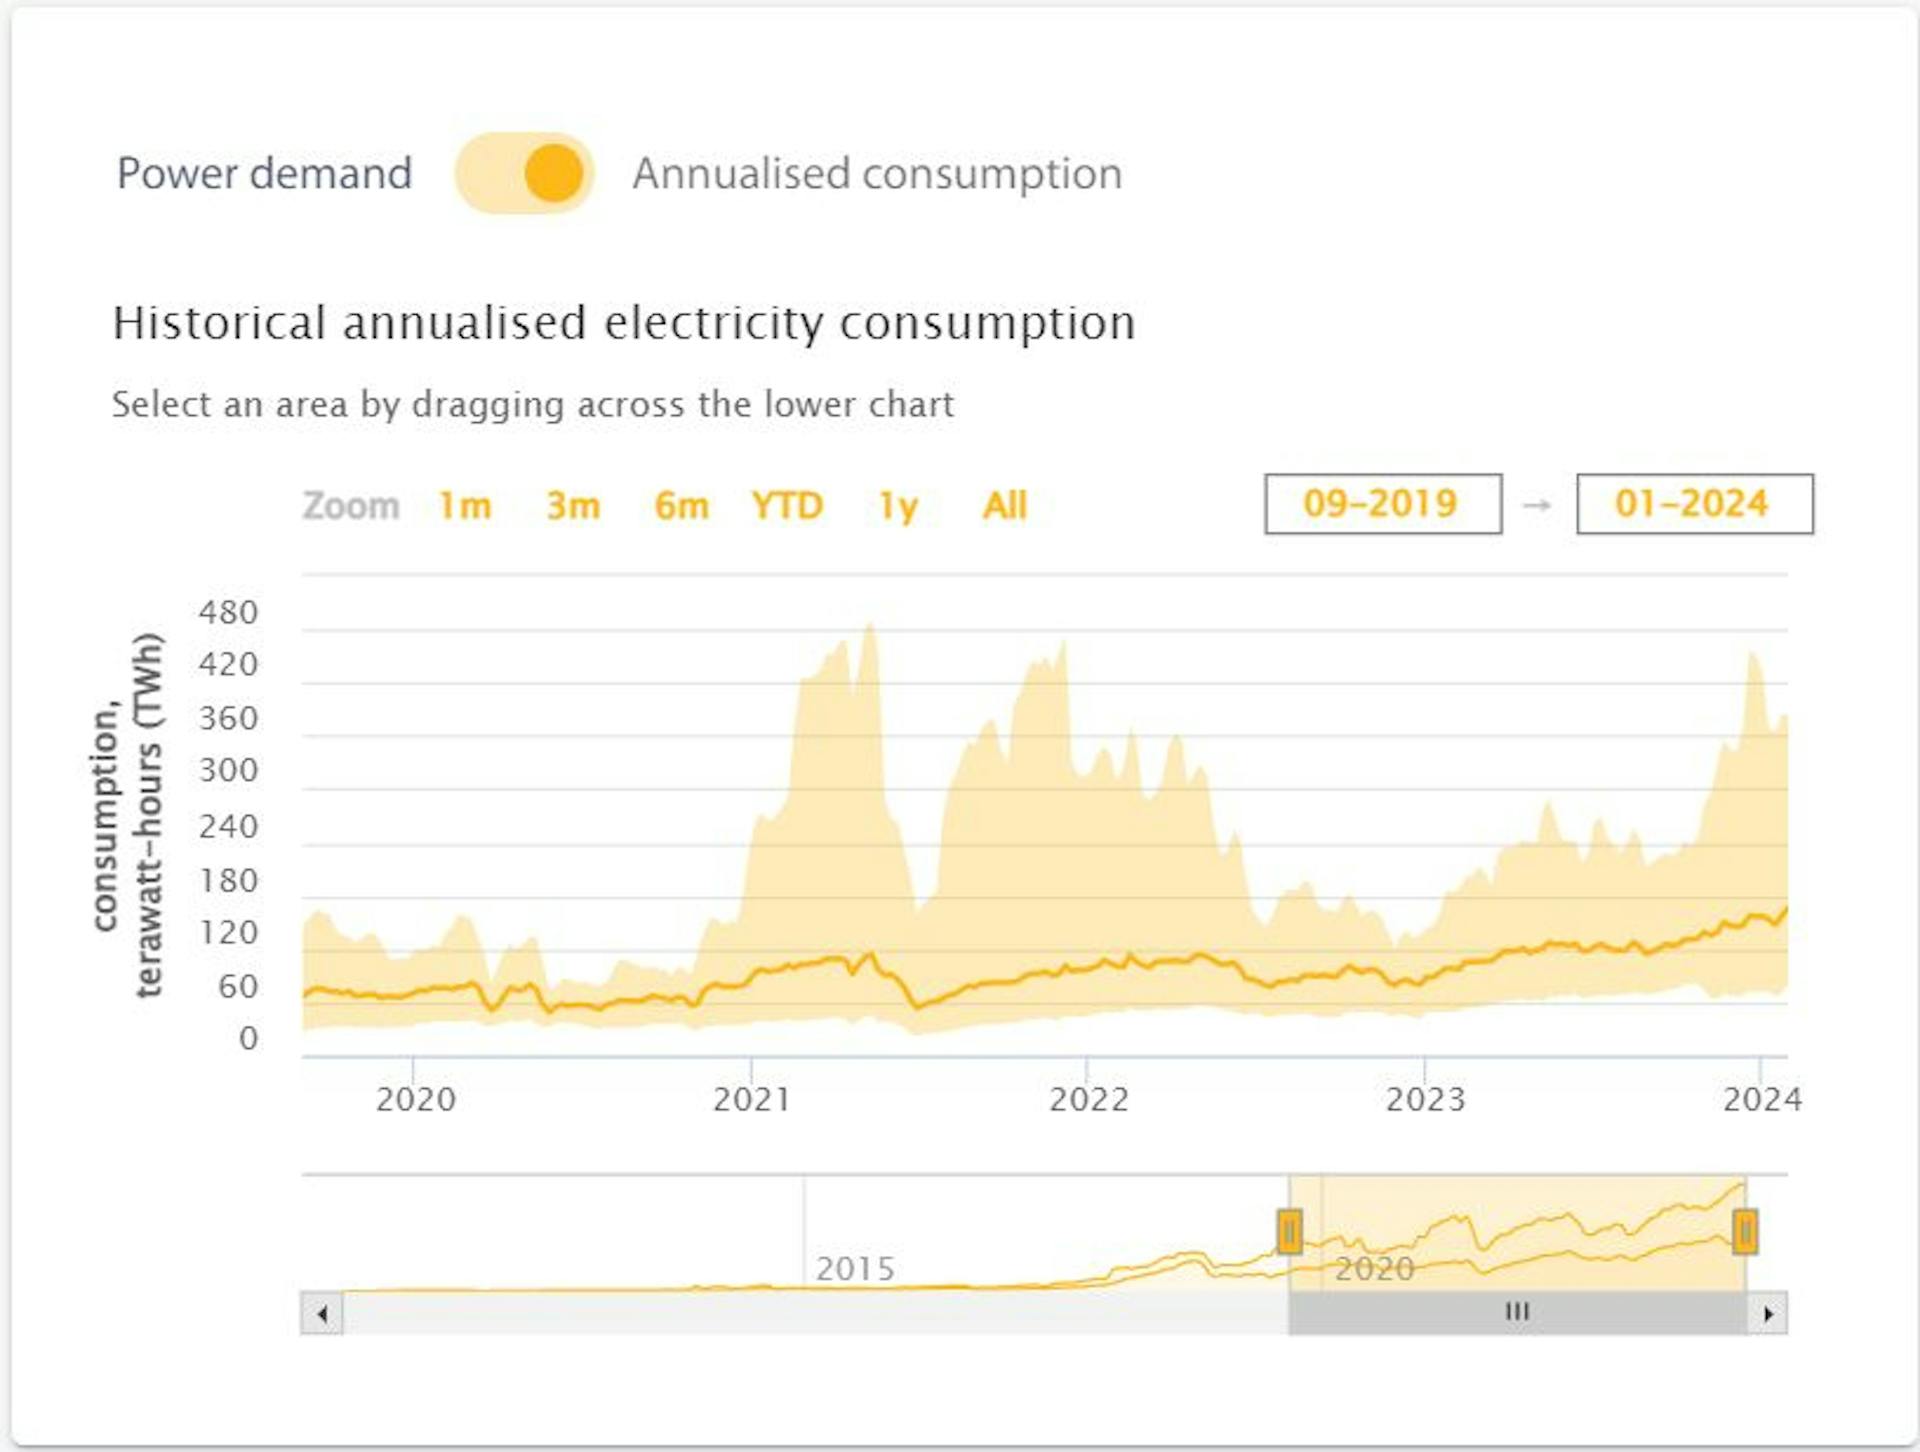 Cambridge Bitcoin Electricity Consumption Index